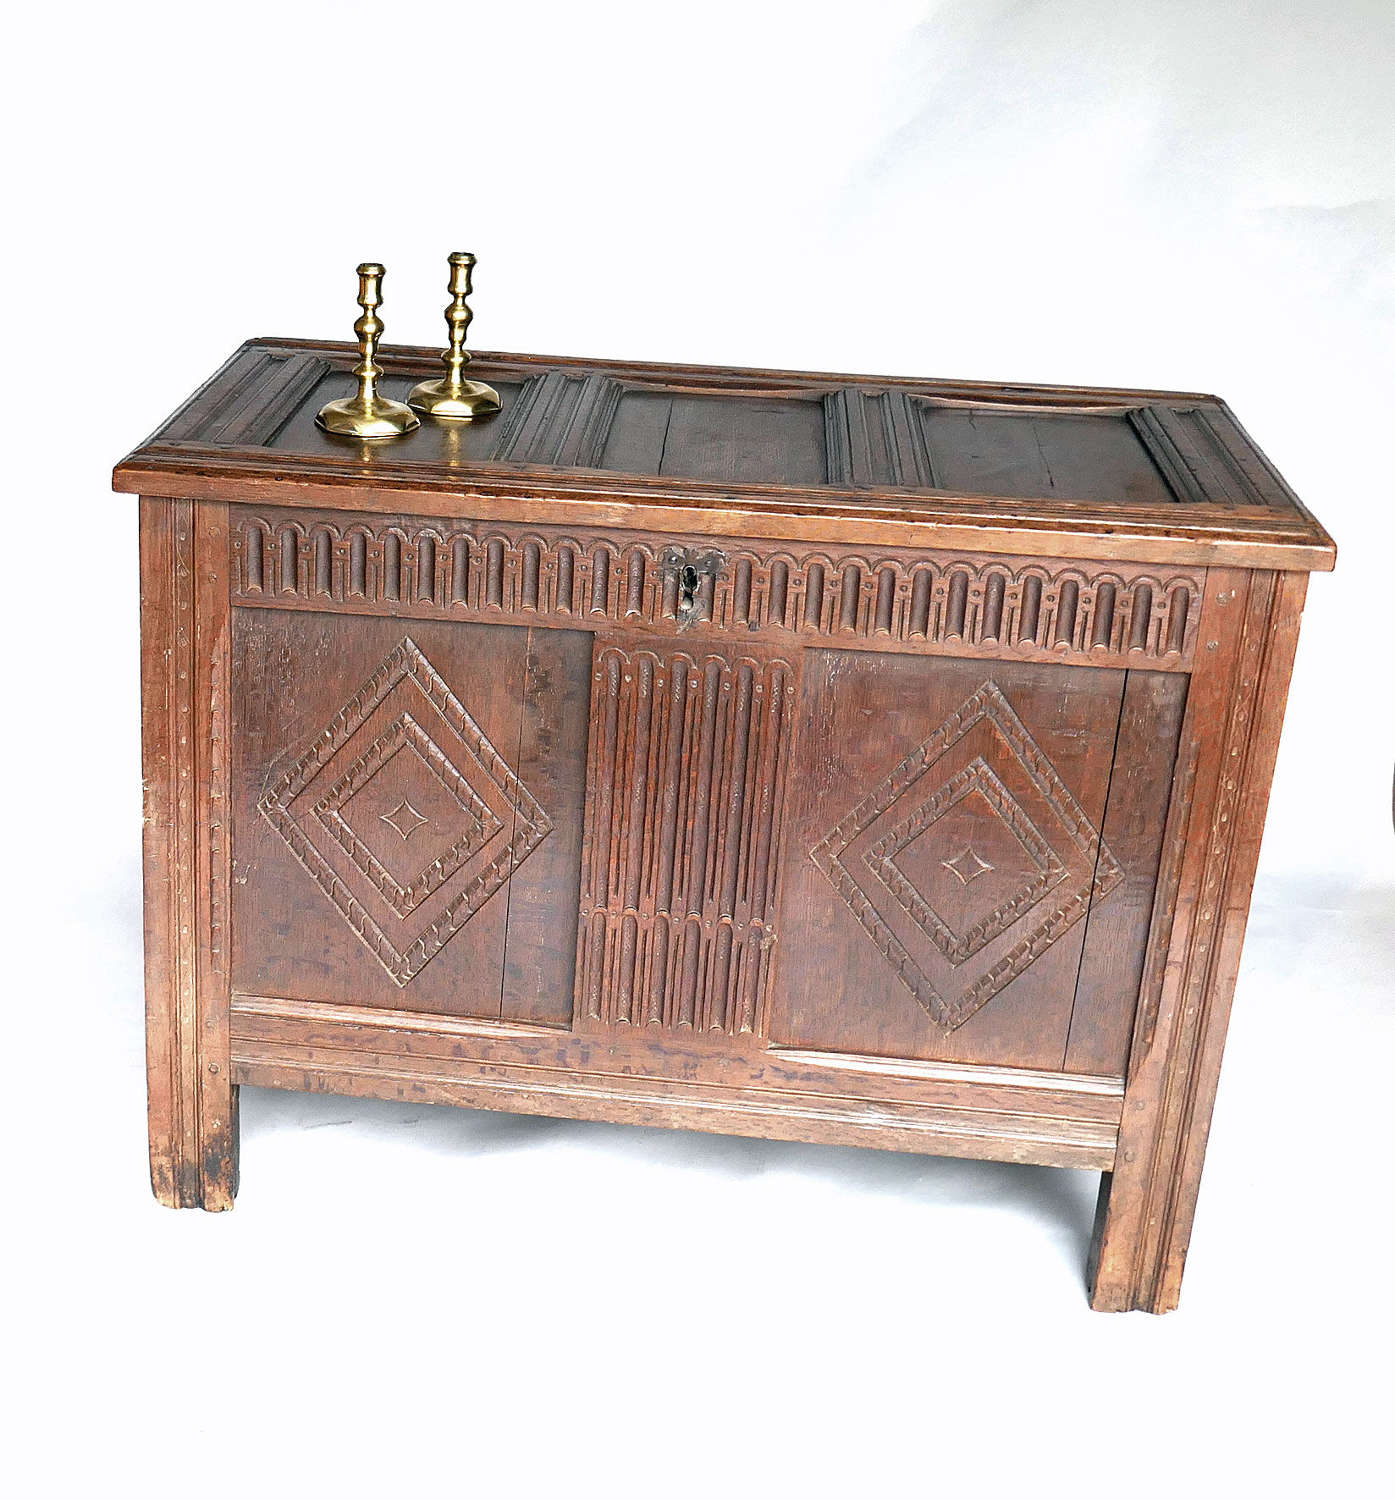 Antique Furniture Early 17thc Period Oak Joyned Coffer. English C1600.